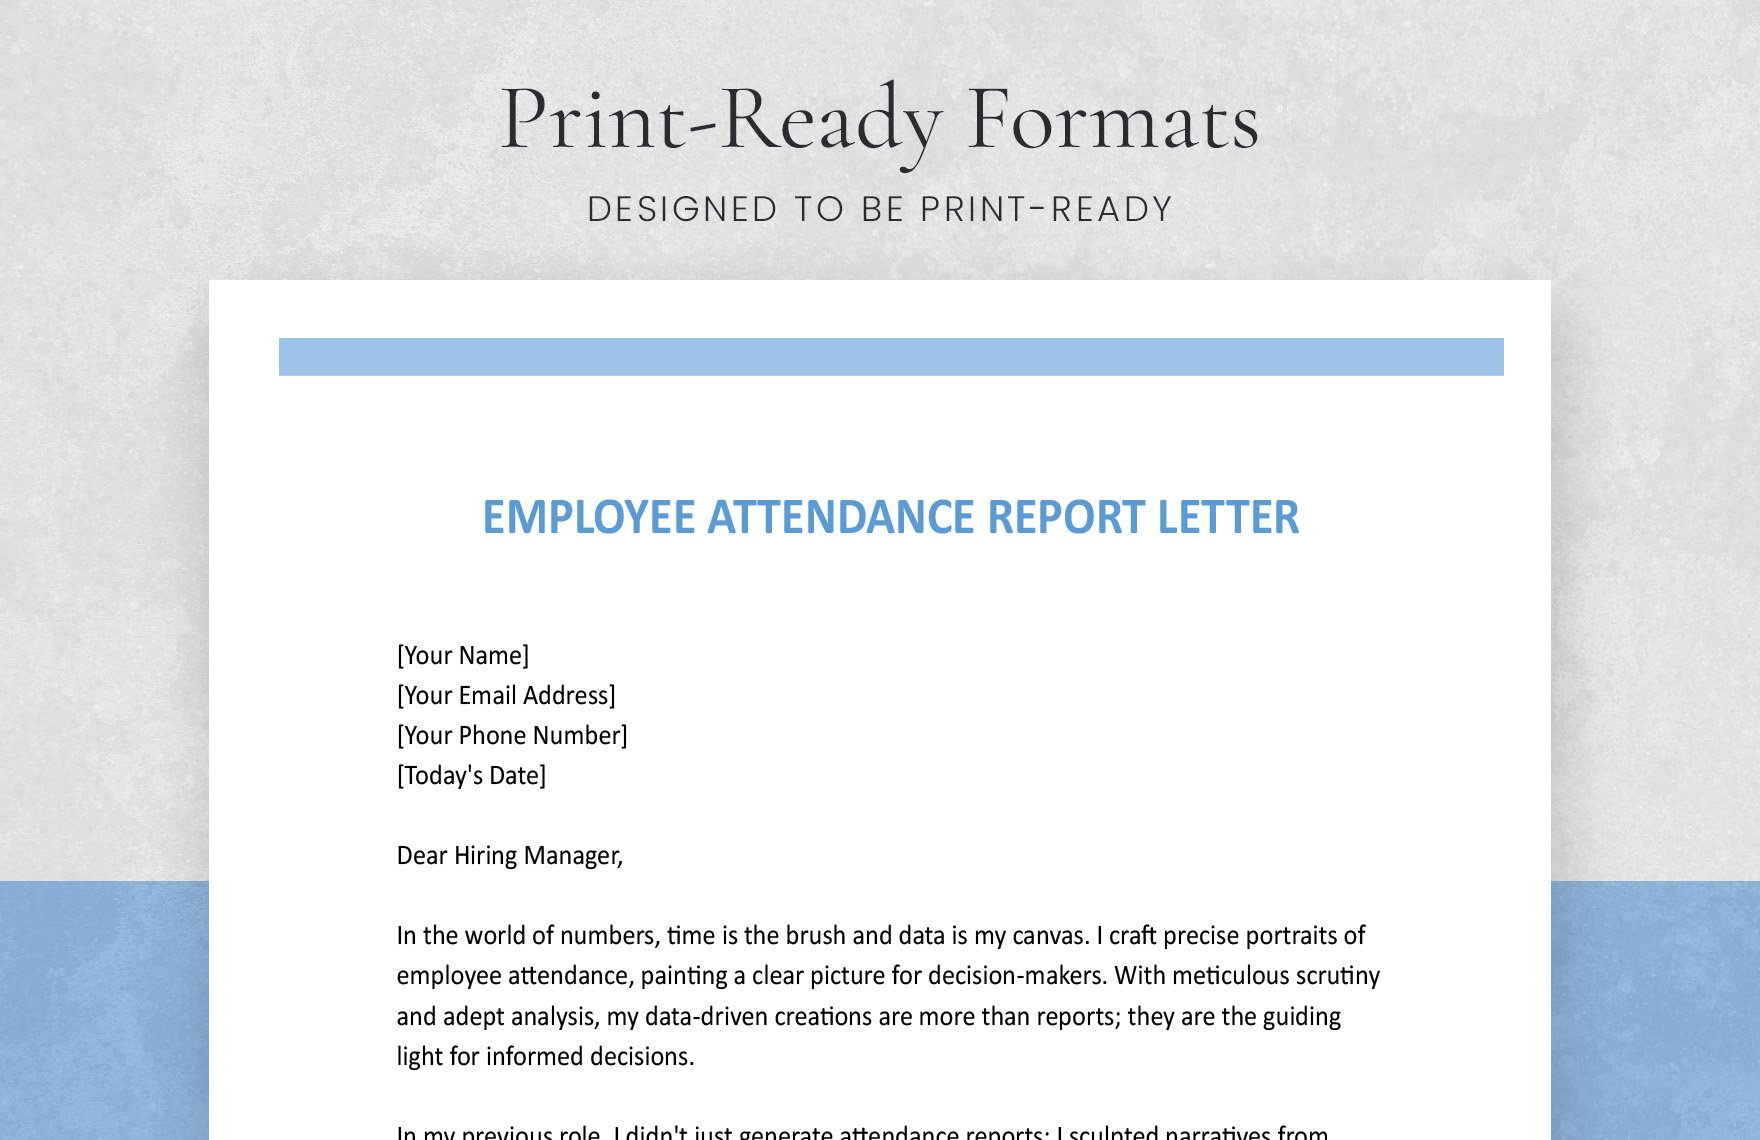 Employee Attendance Report Letter